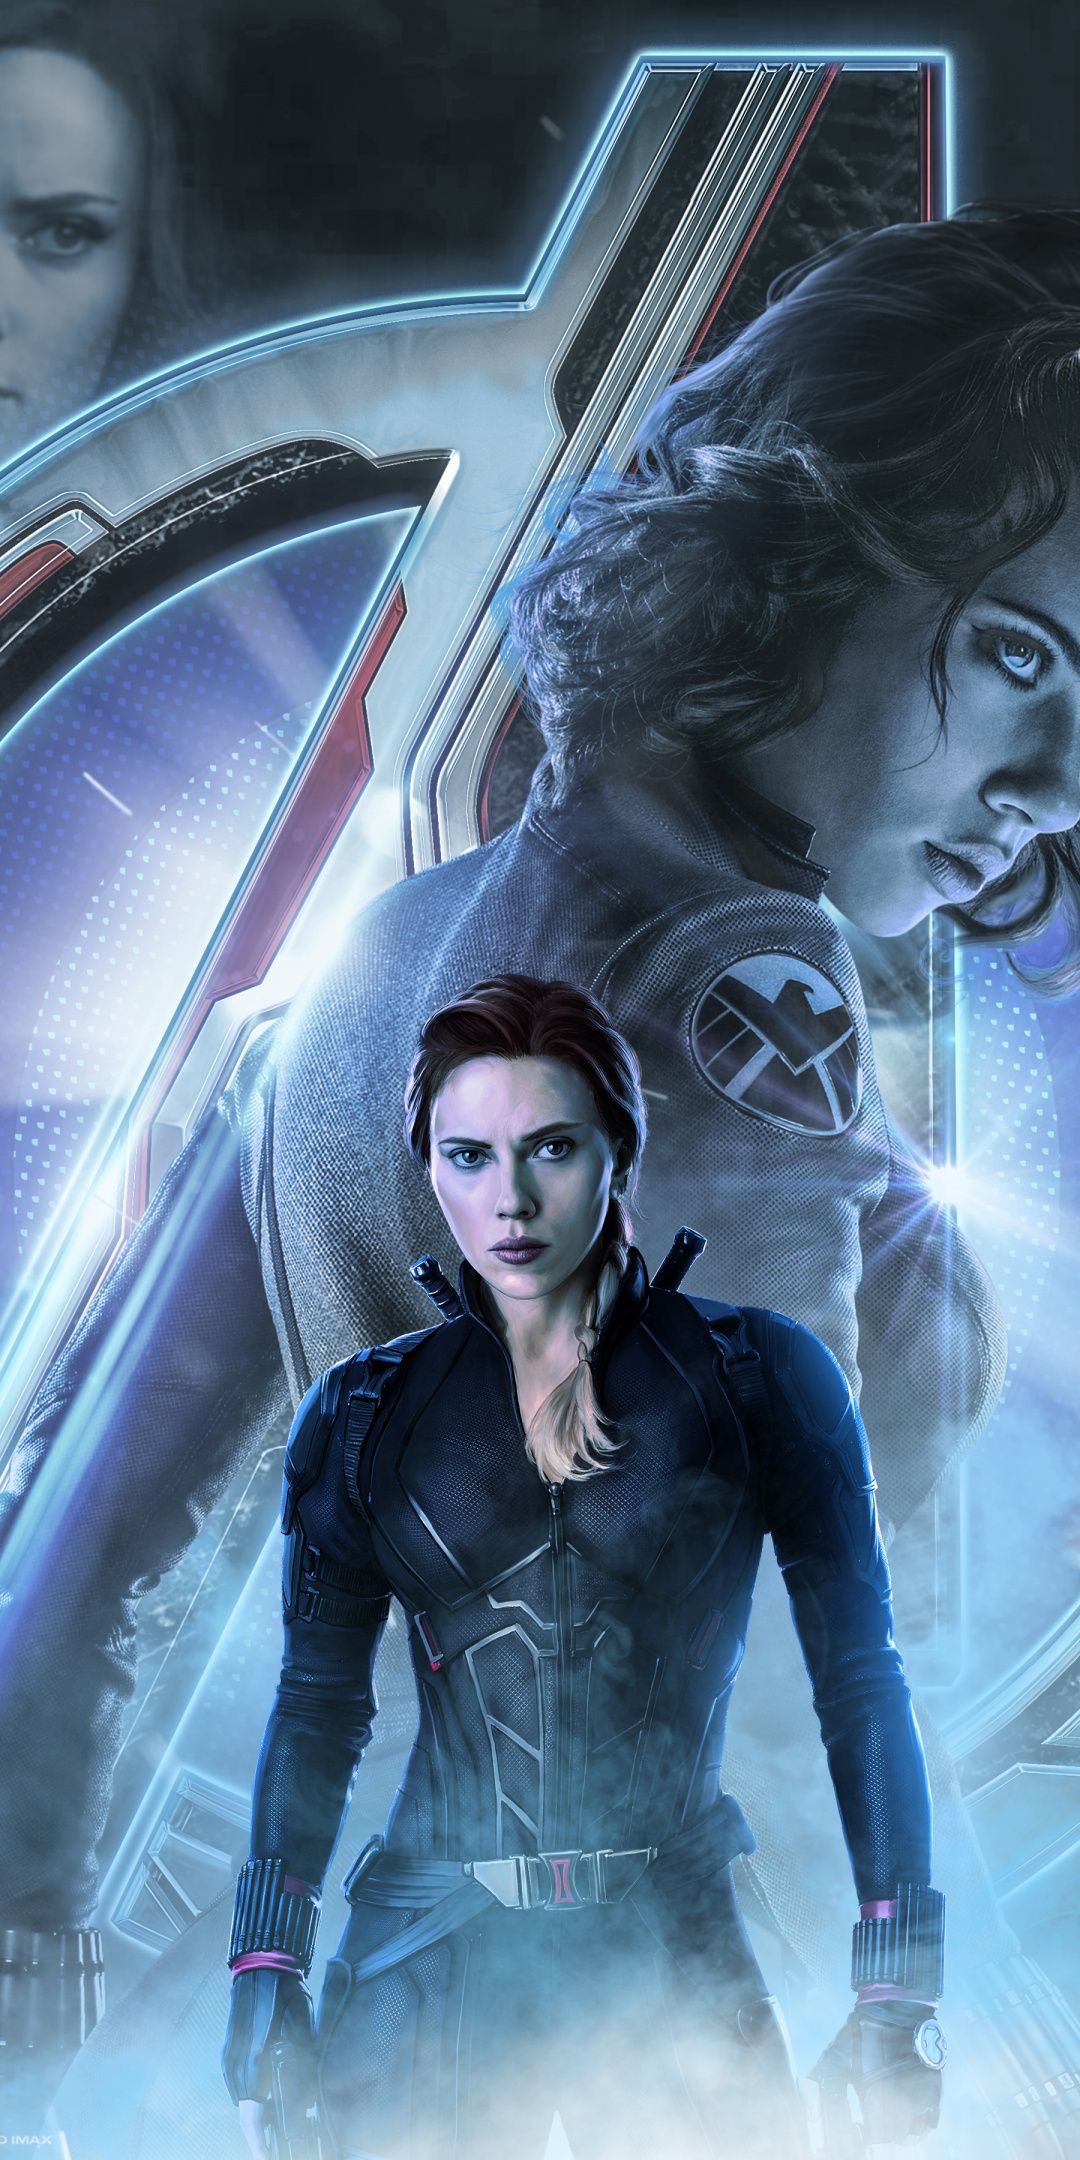 2019 movie Avengers Endgame Black Widow movie poster art